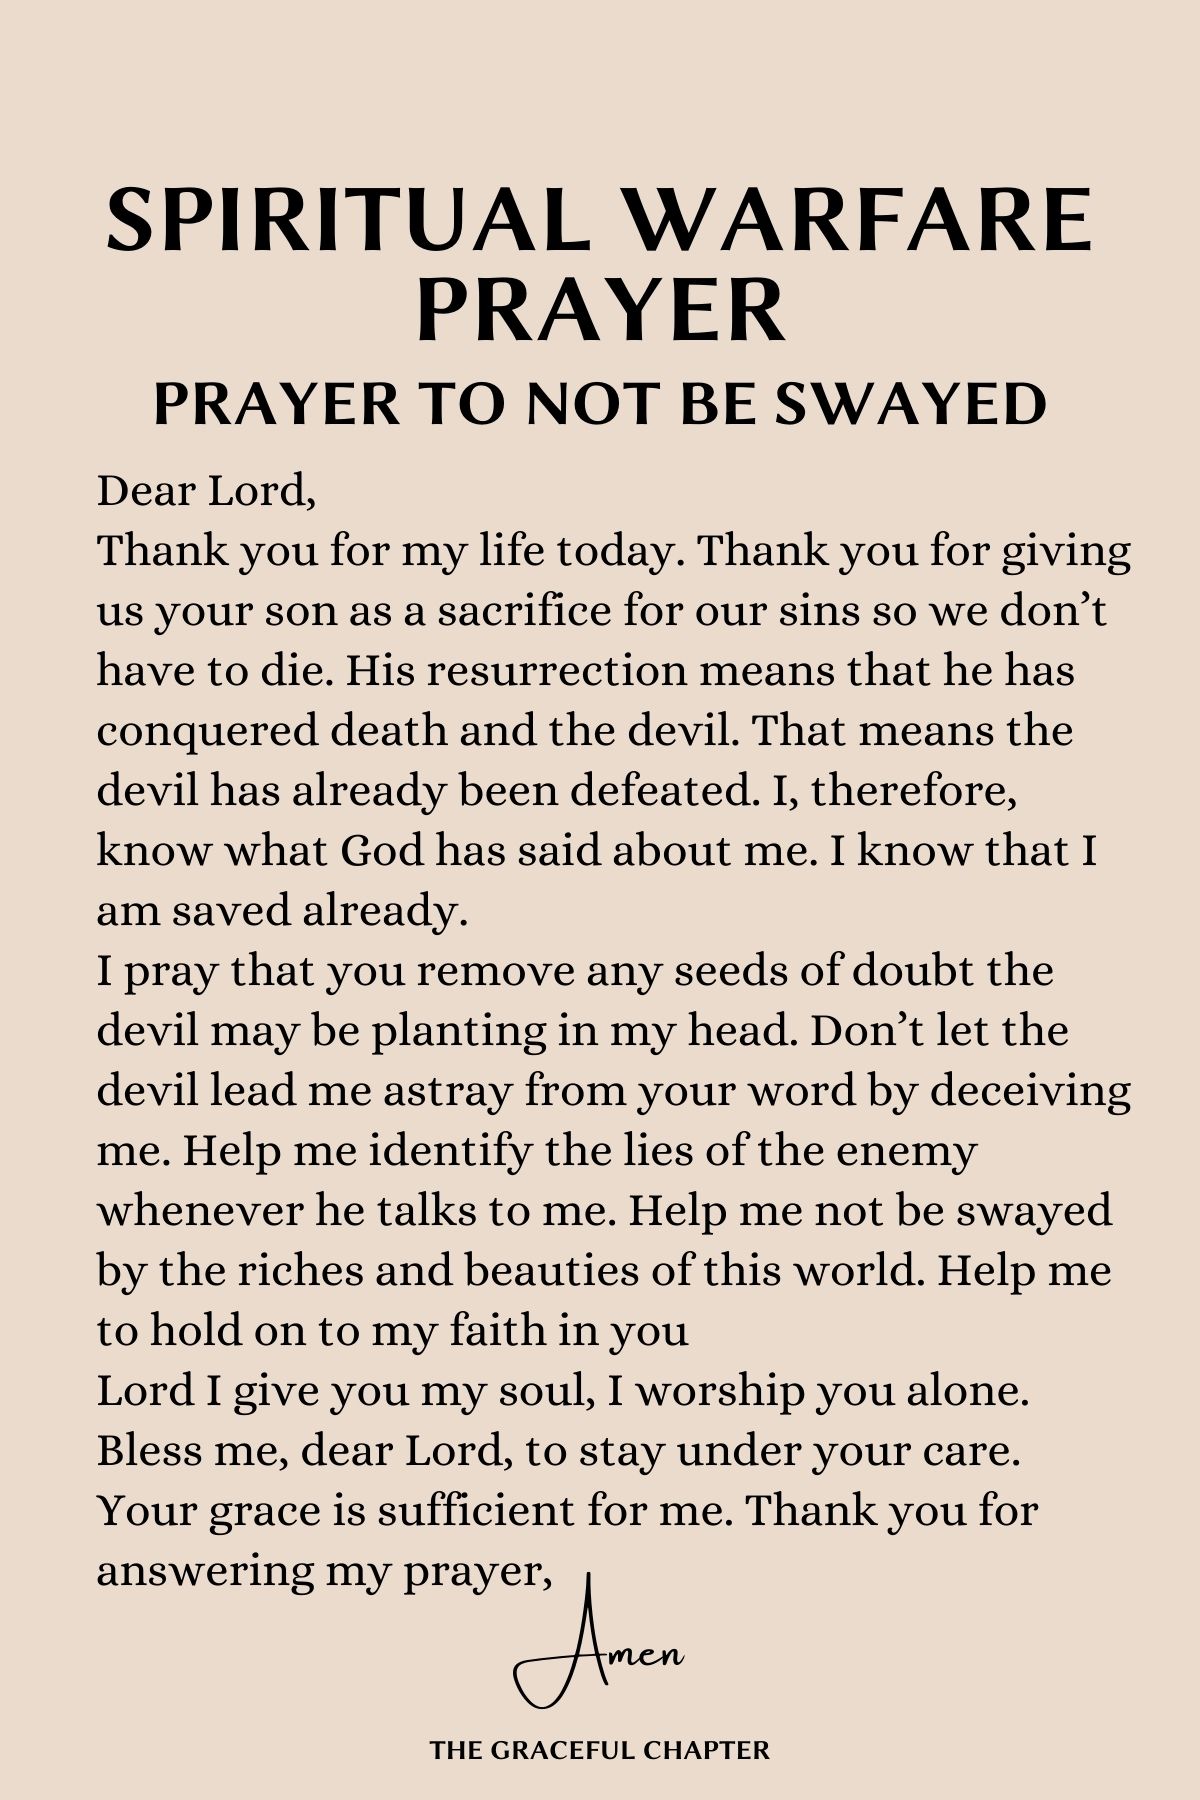 Spiritual warfare prayer - prayer to not be swayed